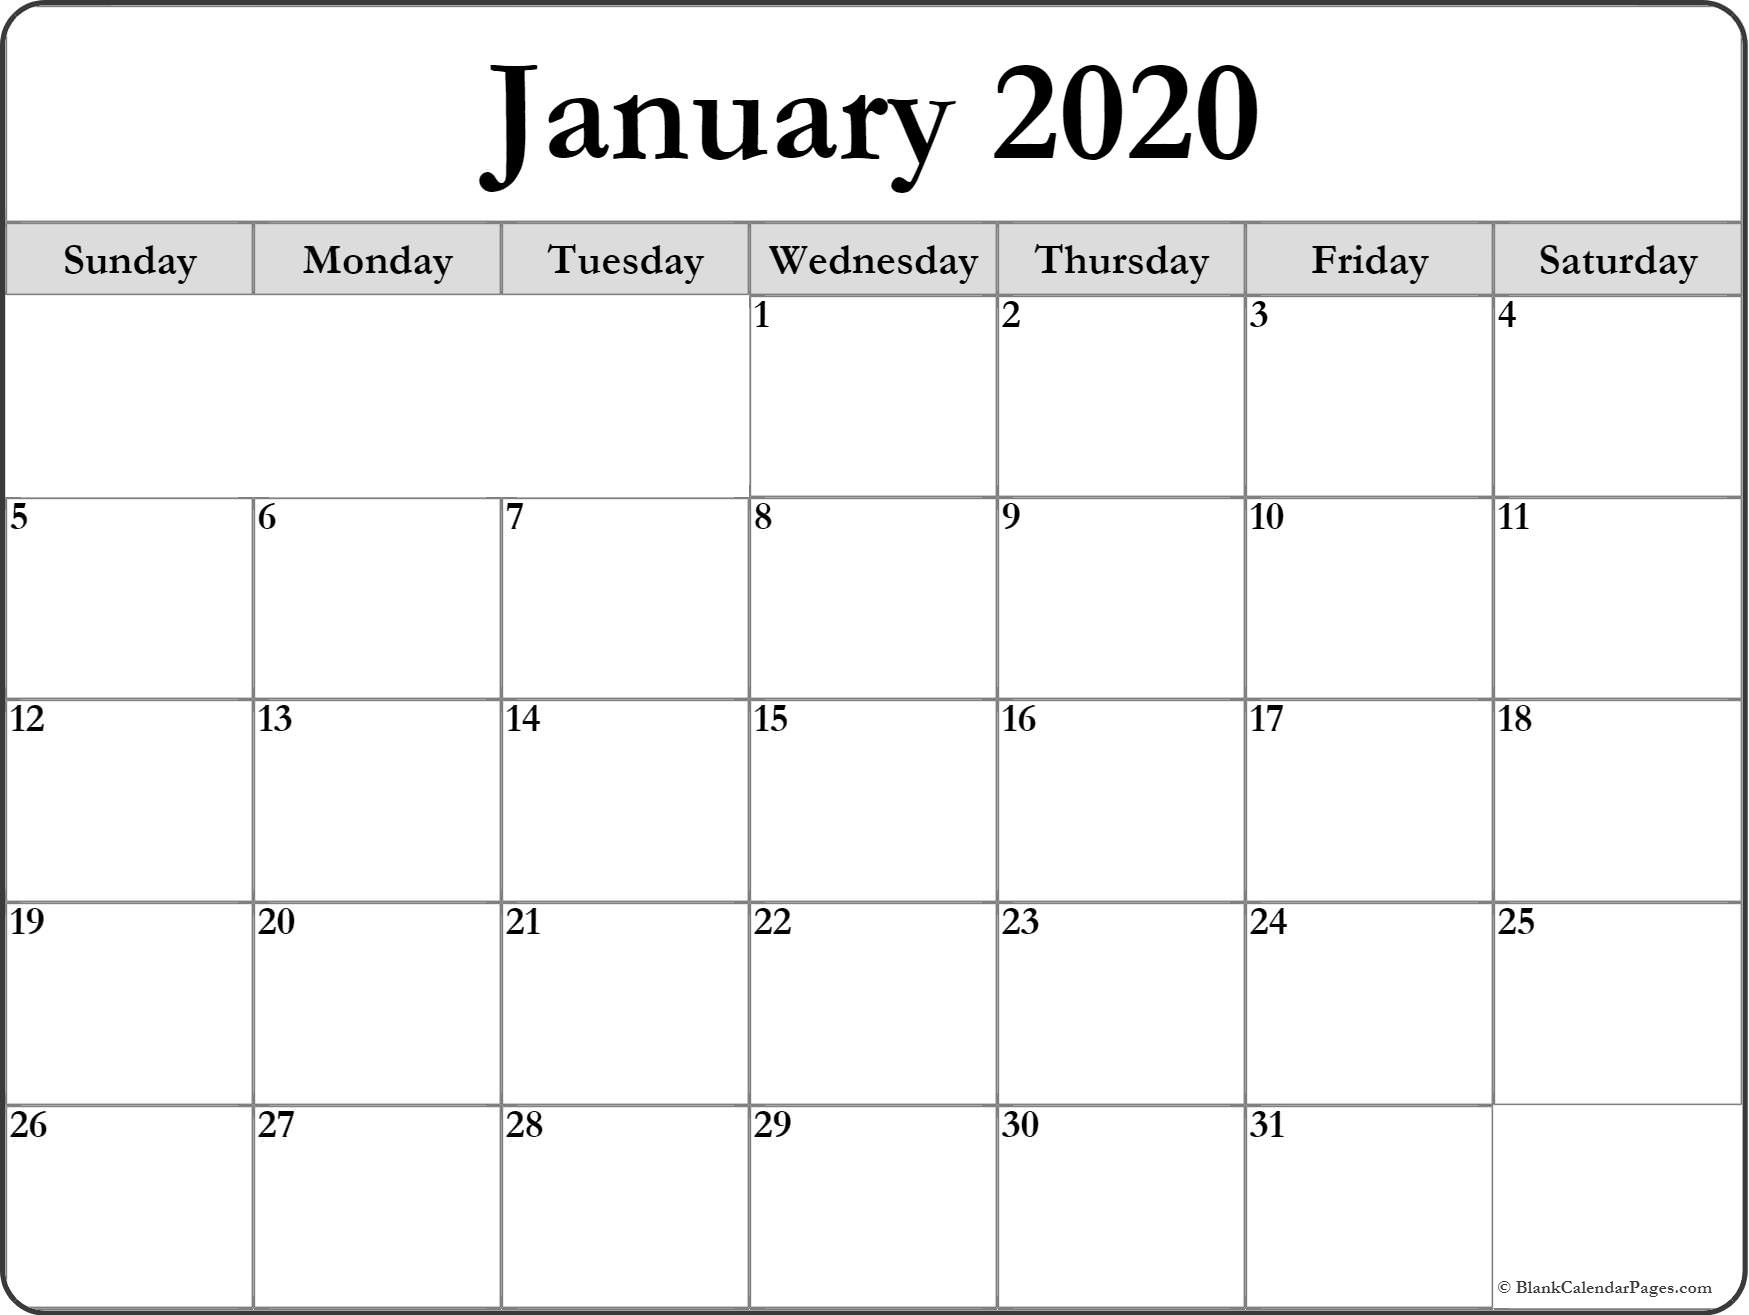 Free January 2020 Calendar Printable January 2020 Blank Calendar Free Printable Calendar January 2020